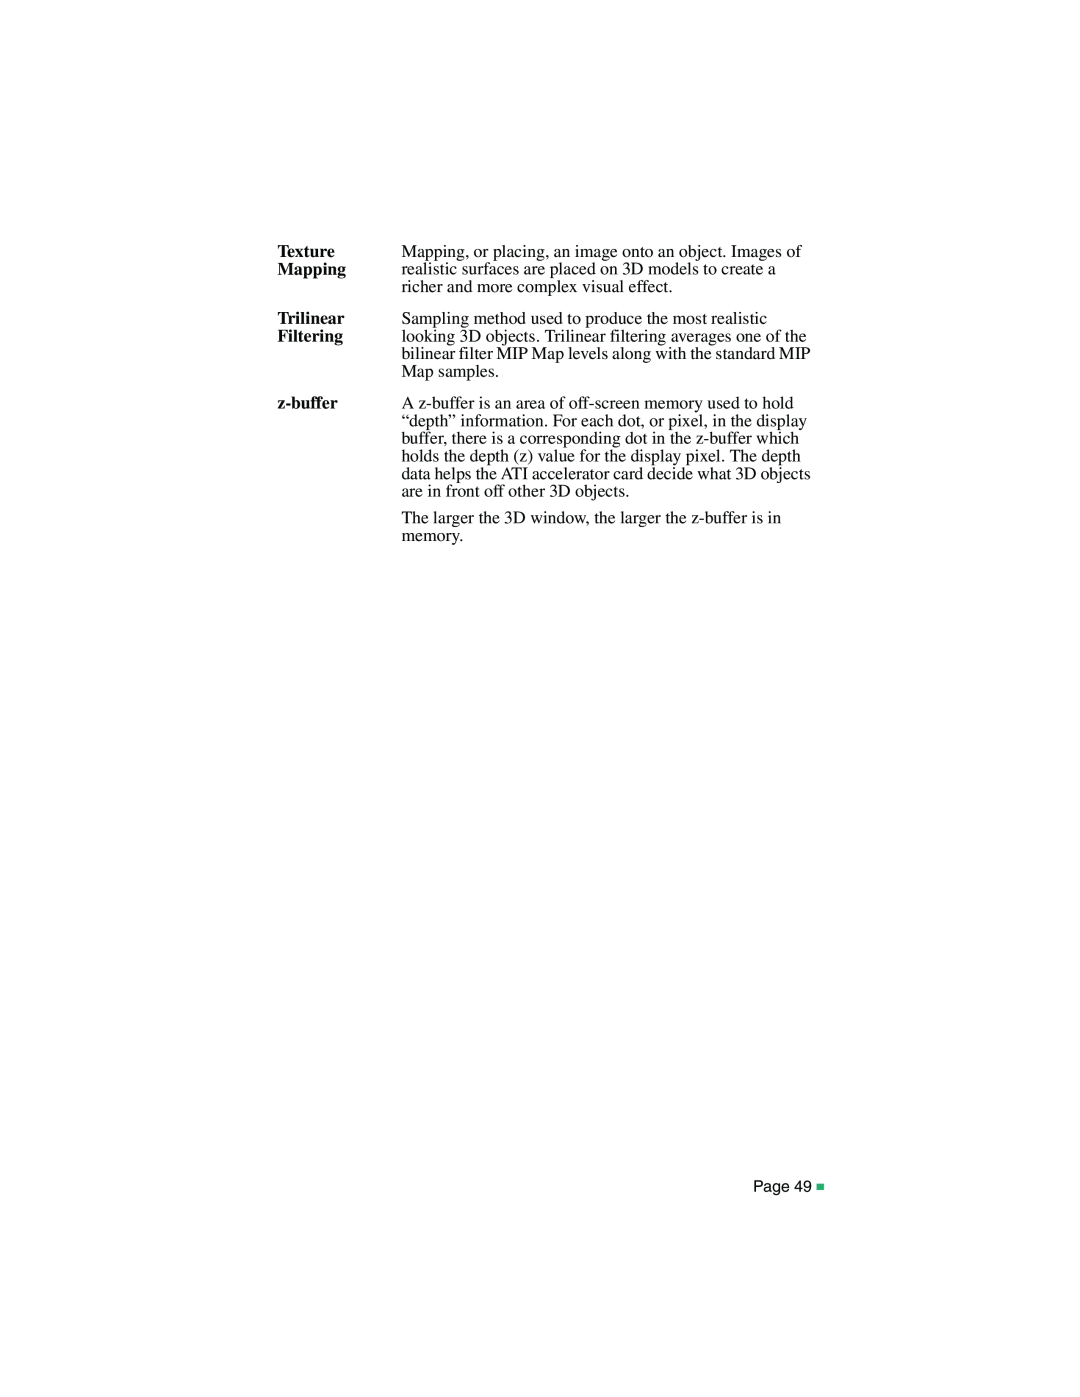 ATI Technologies RADEON MAC EDITION, 107-40214-20 manual Texture, Mapping, Trilinear, z-buffer, Filtering 